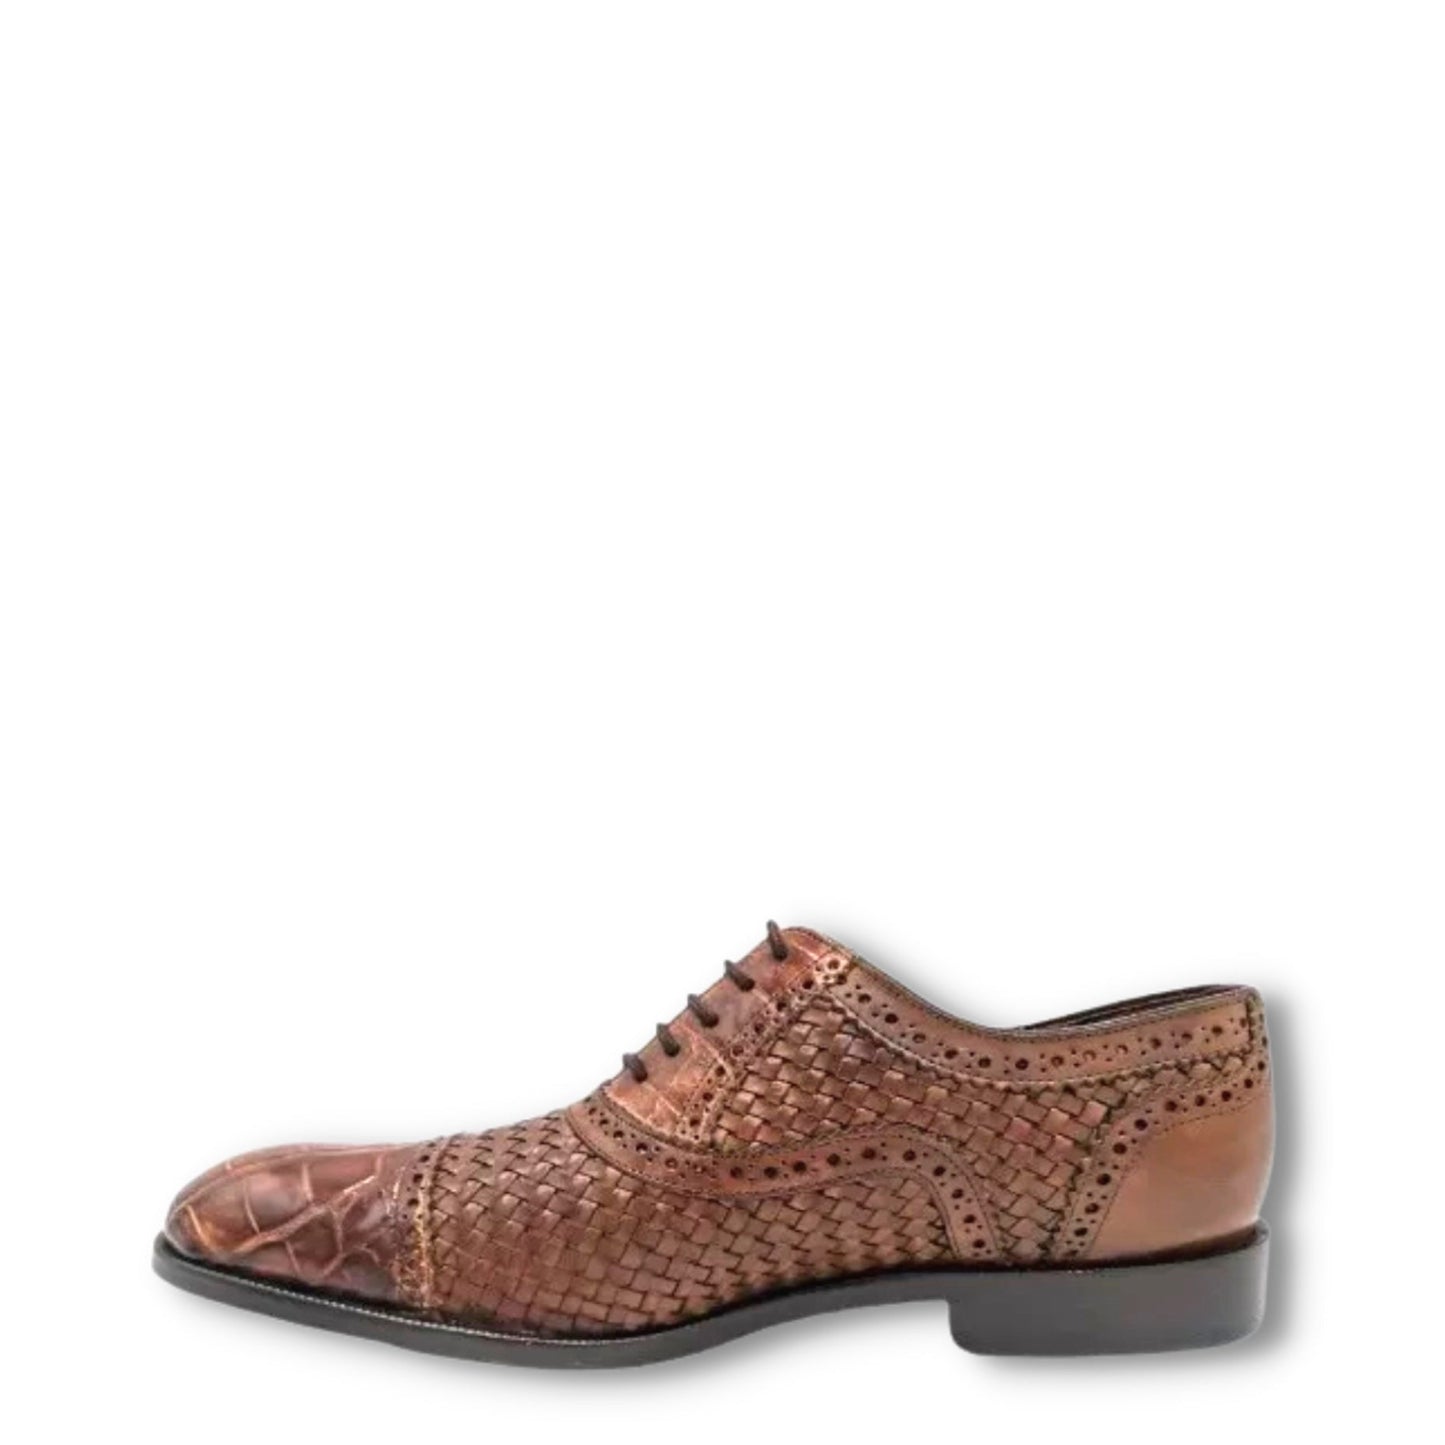 28FLPUE - Cuadra brown dress alligator woven oxford cap toe shoes for men-FRANCO CUADRA-Kuet-Cuadra-Boots